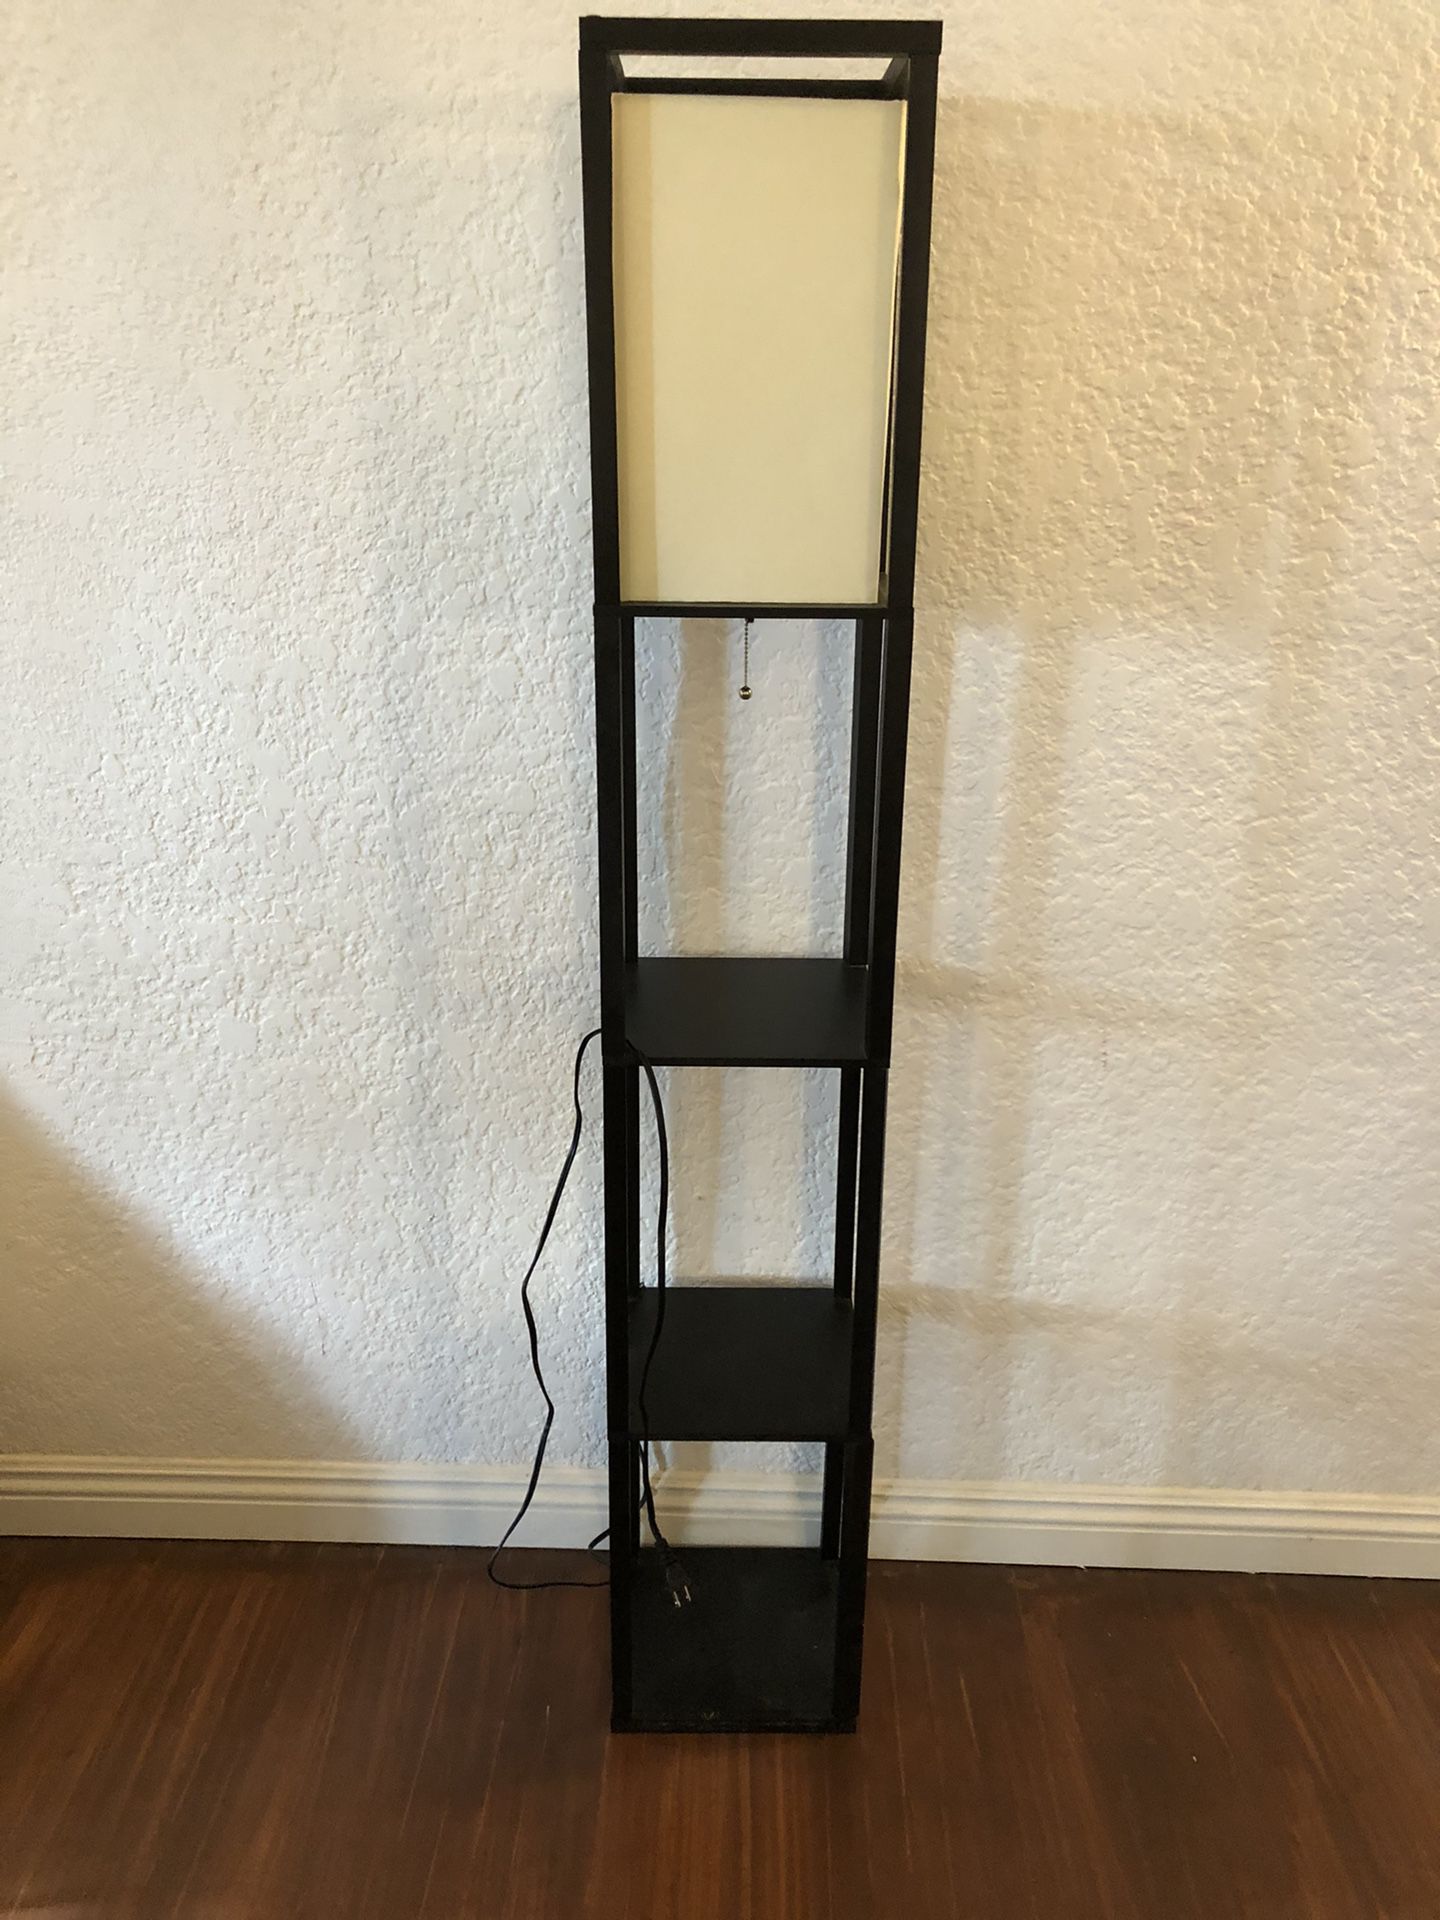 Floor lamp with shelves